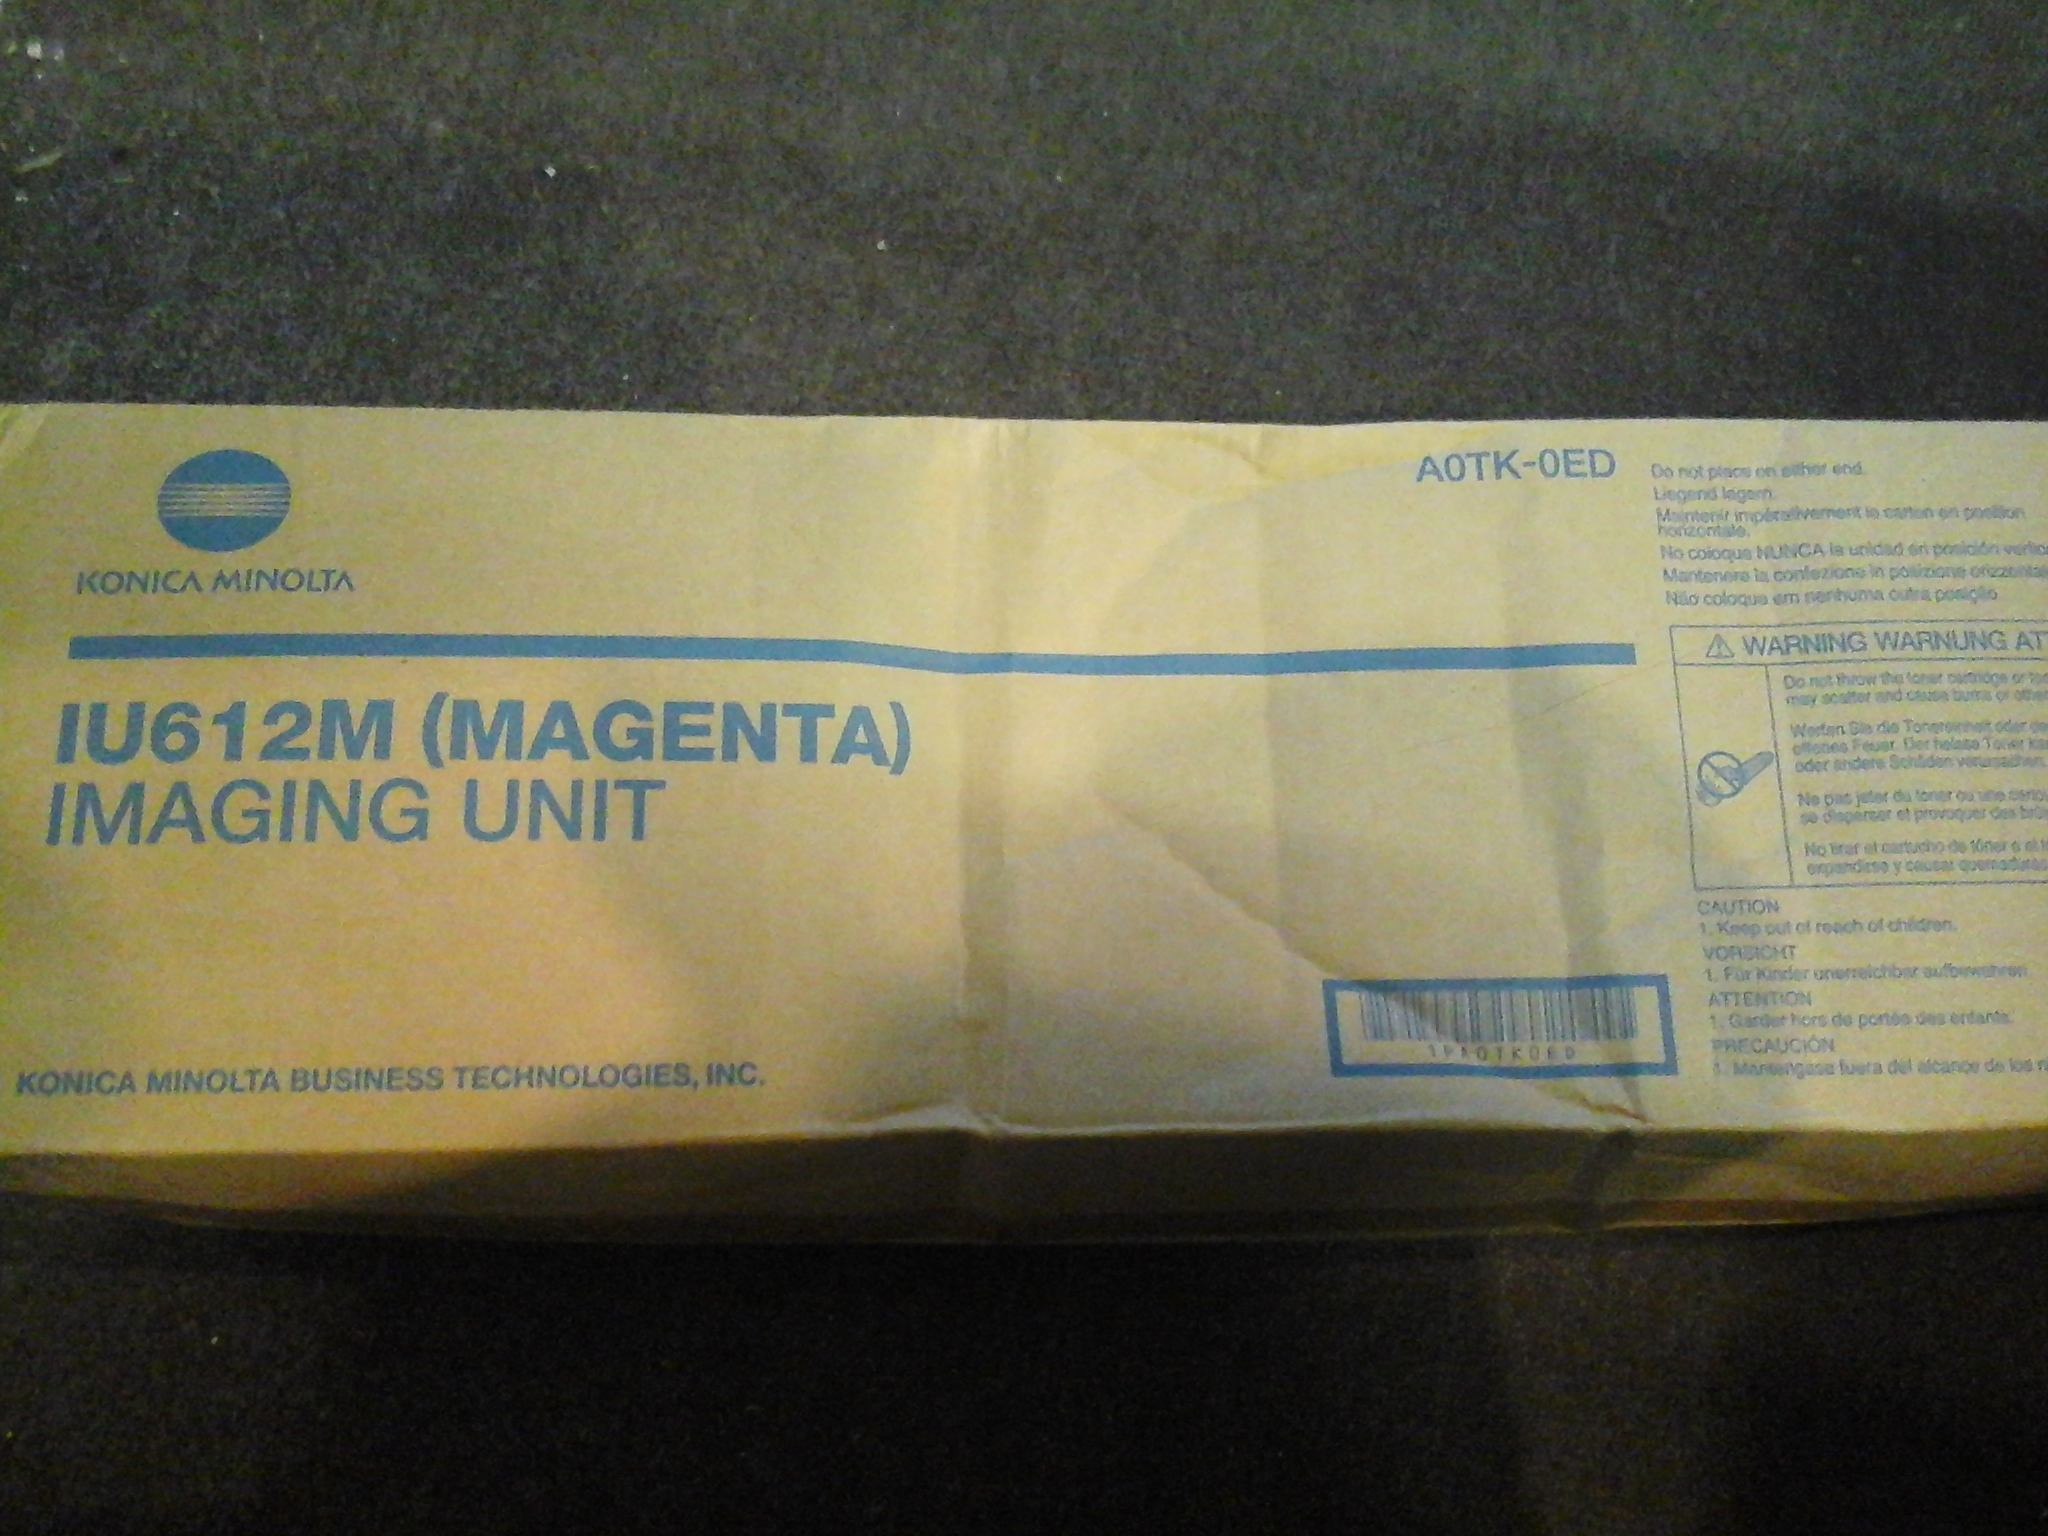 Genuine Konica Minolta Imaging Unit IU612M Magenta A0TK-0ED A- VAT Included - Picture 1 of 1